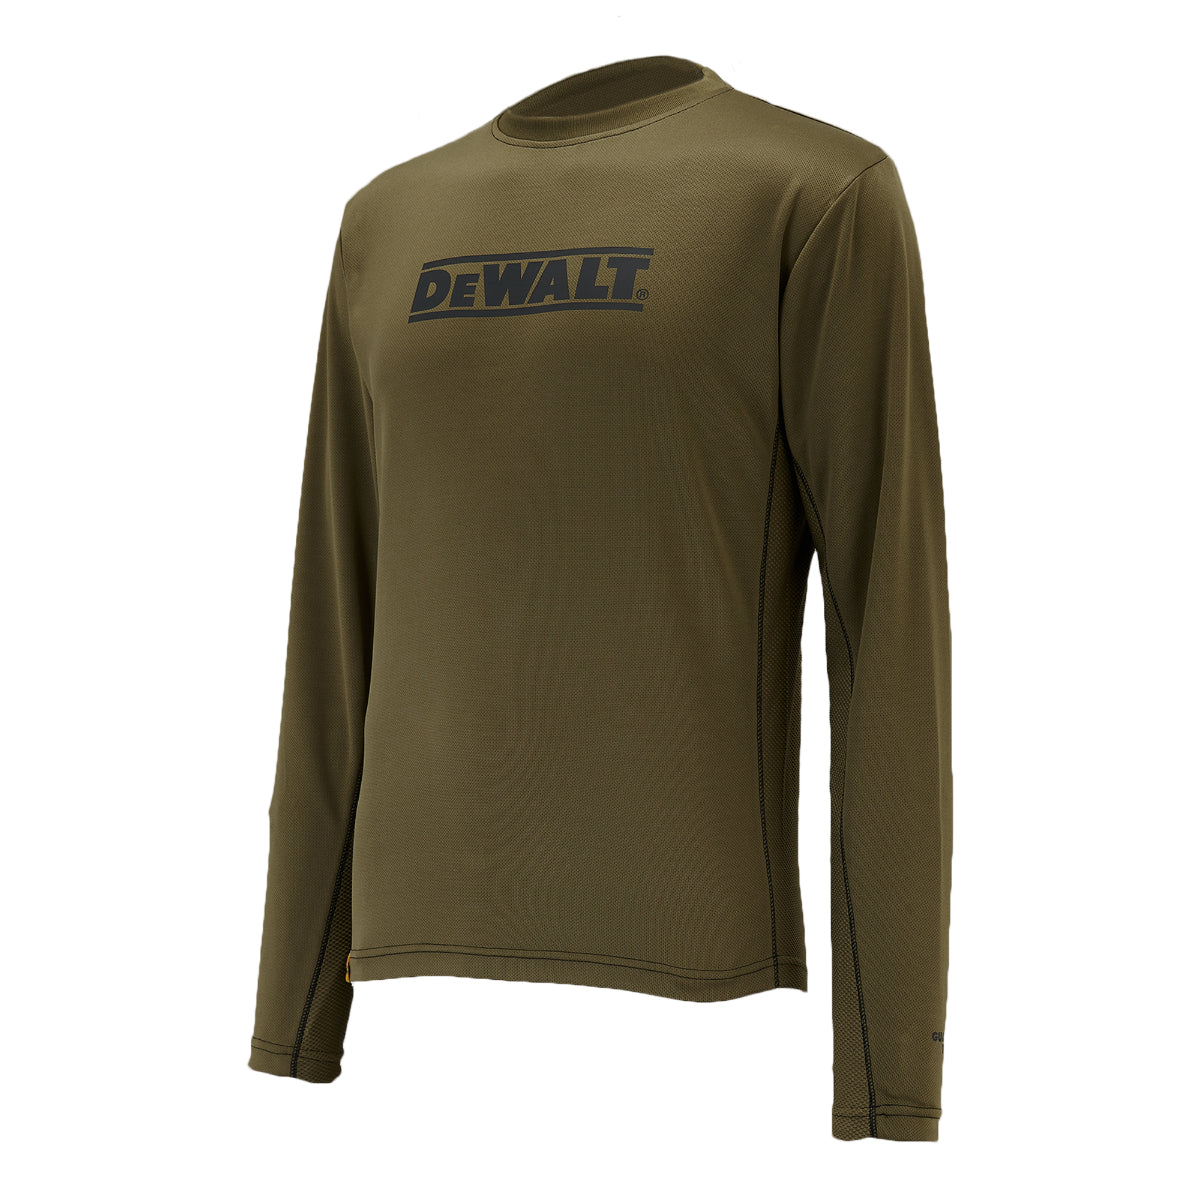 DeWalt Long Sleeve Performance T-Shirt